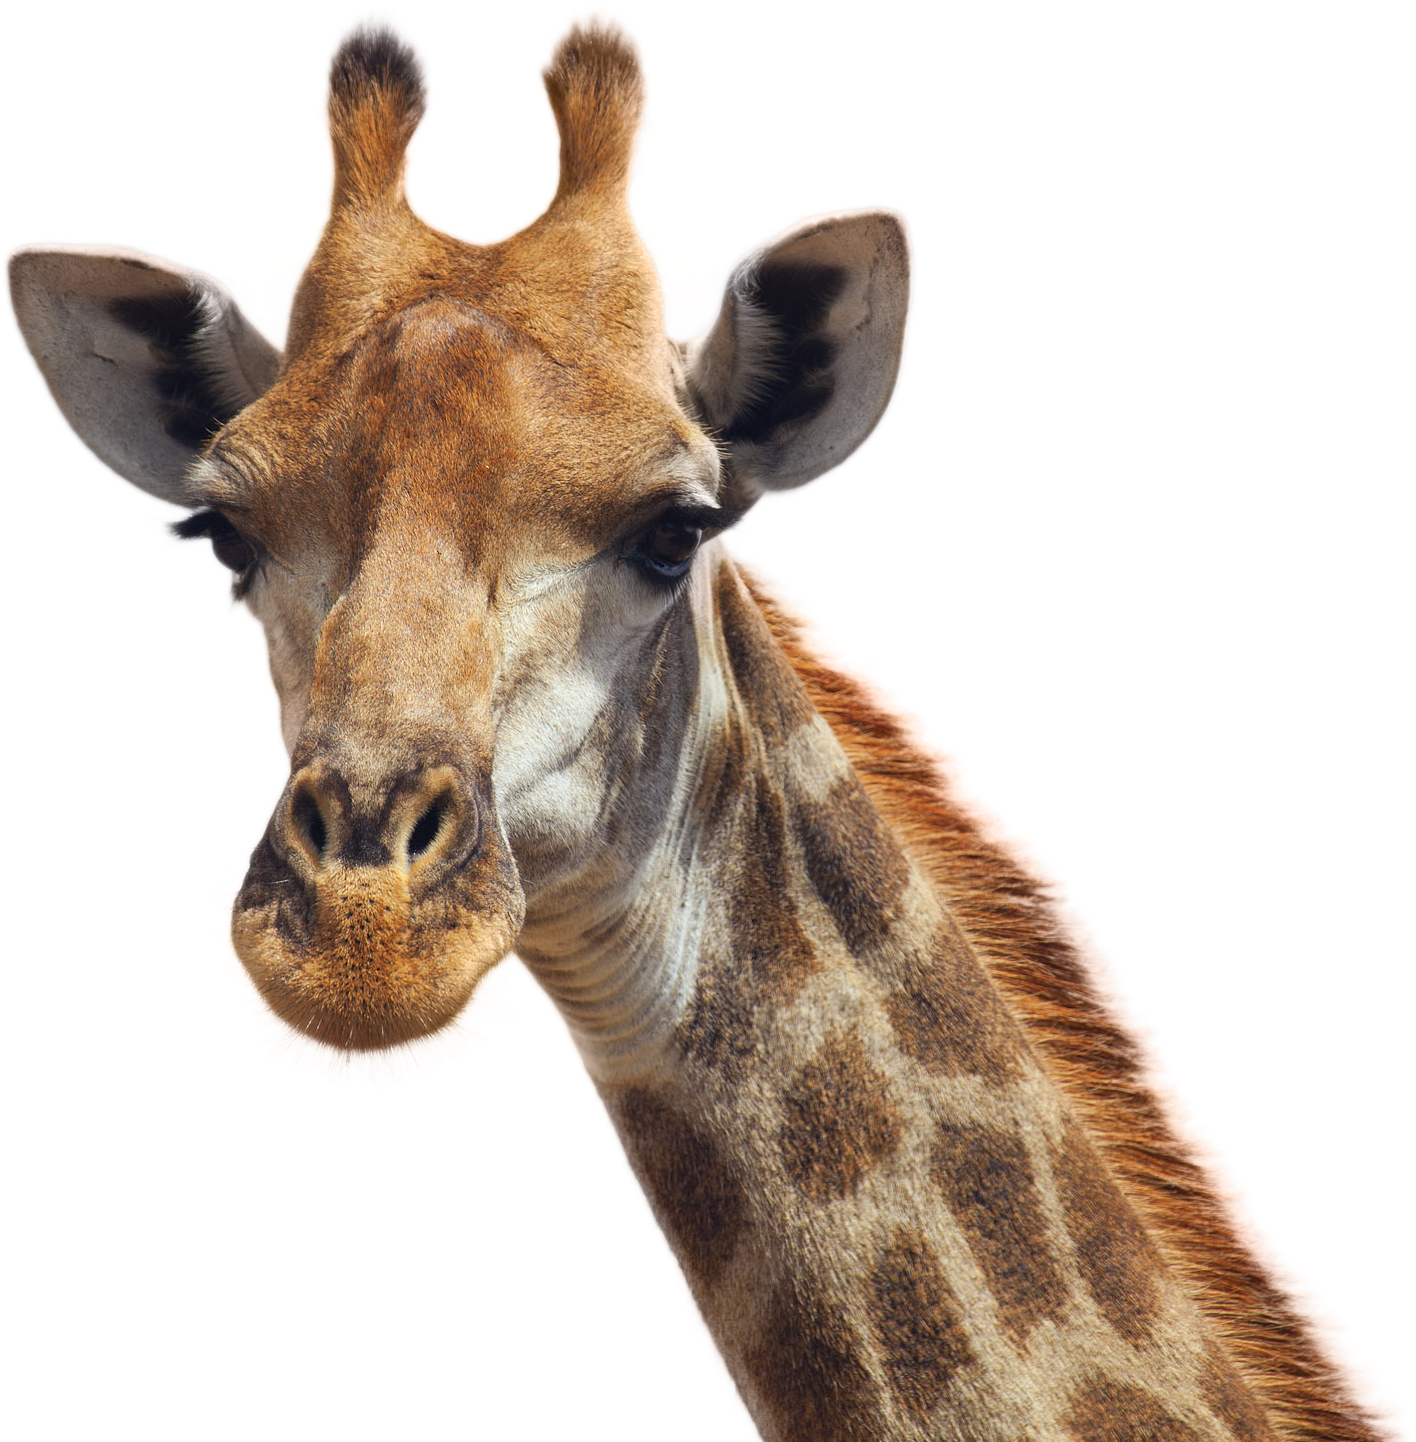 Giraffe Portrait Close Up.png